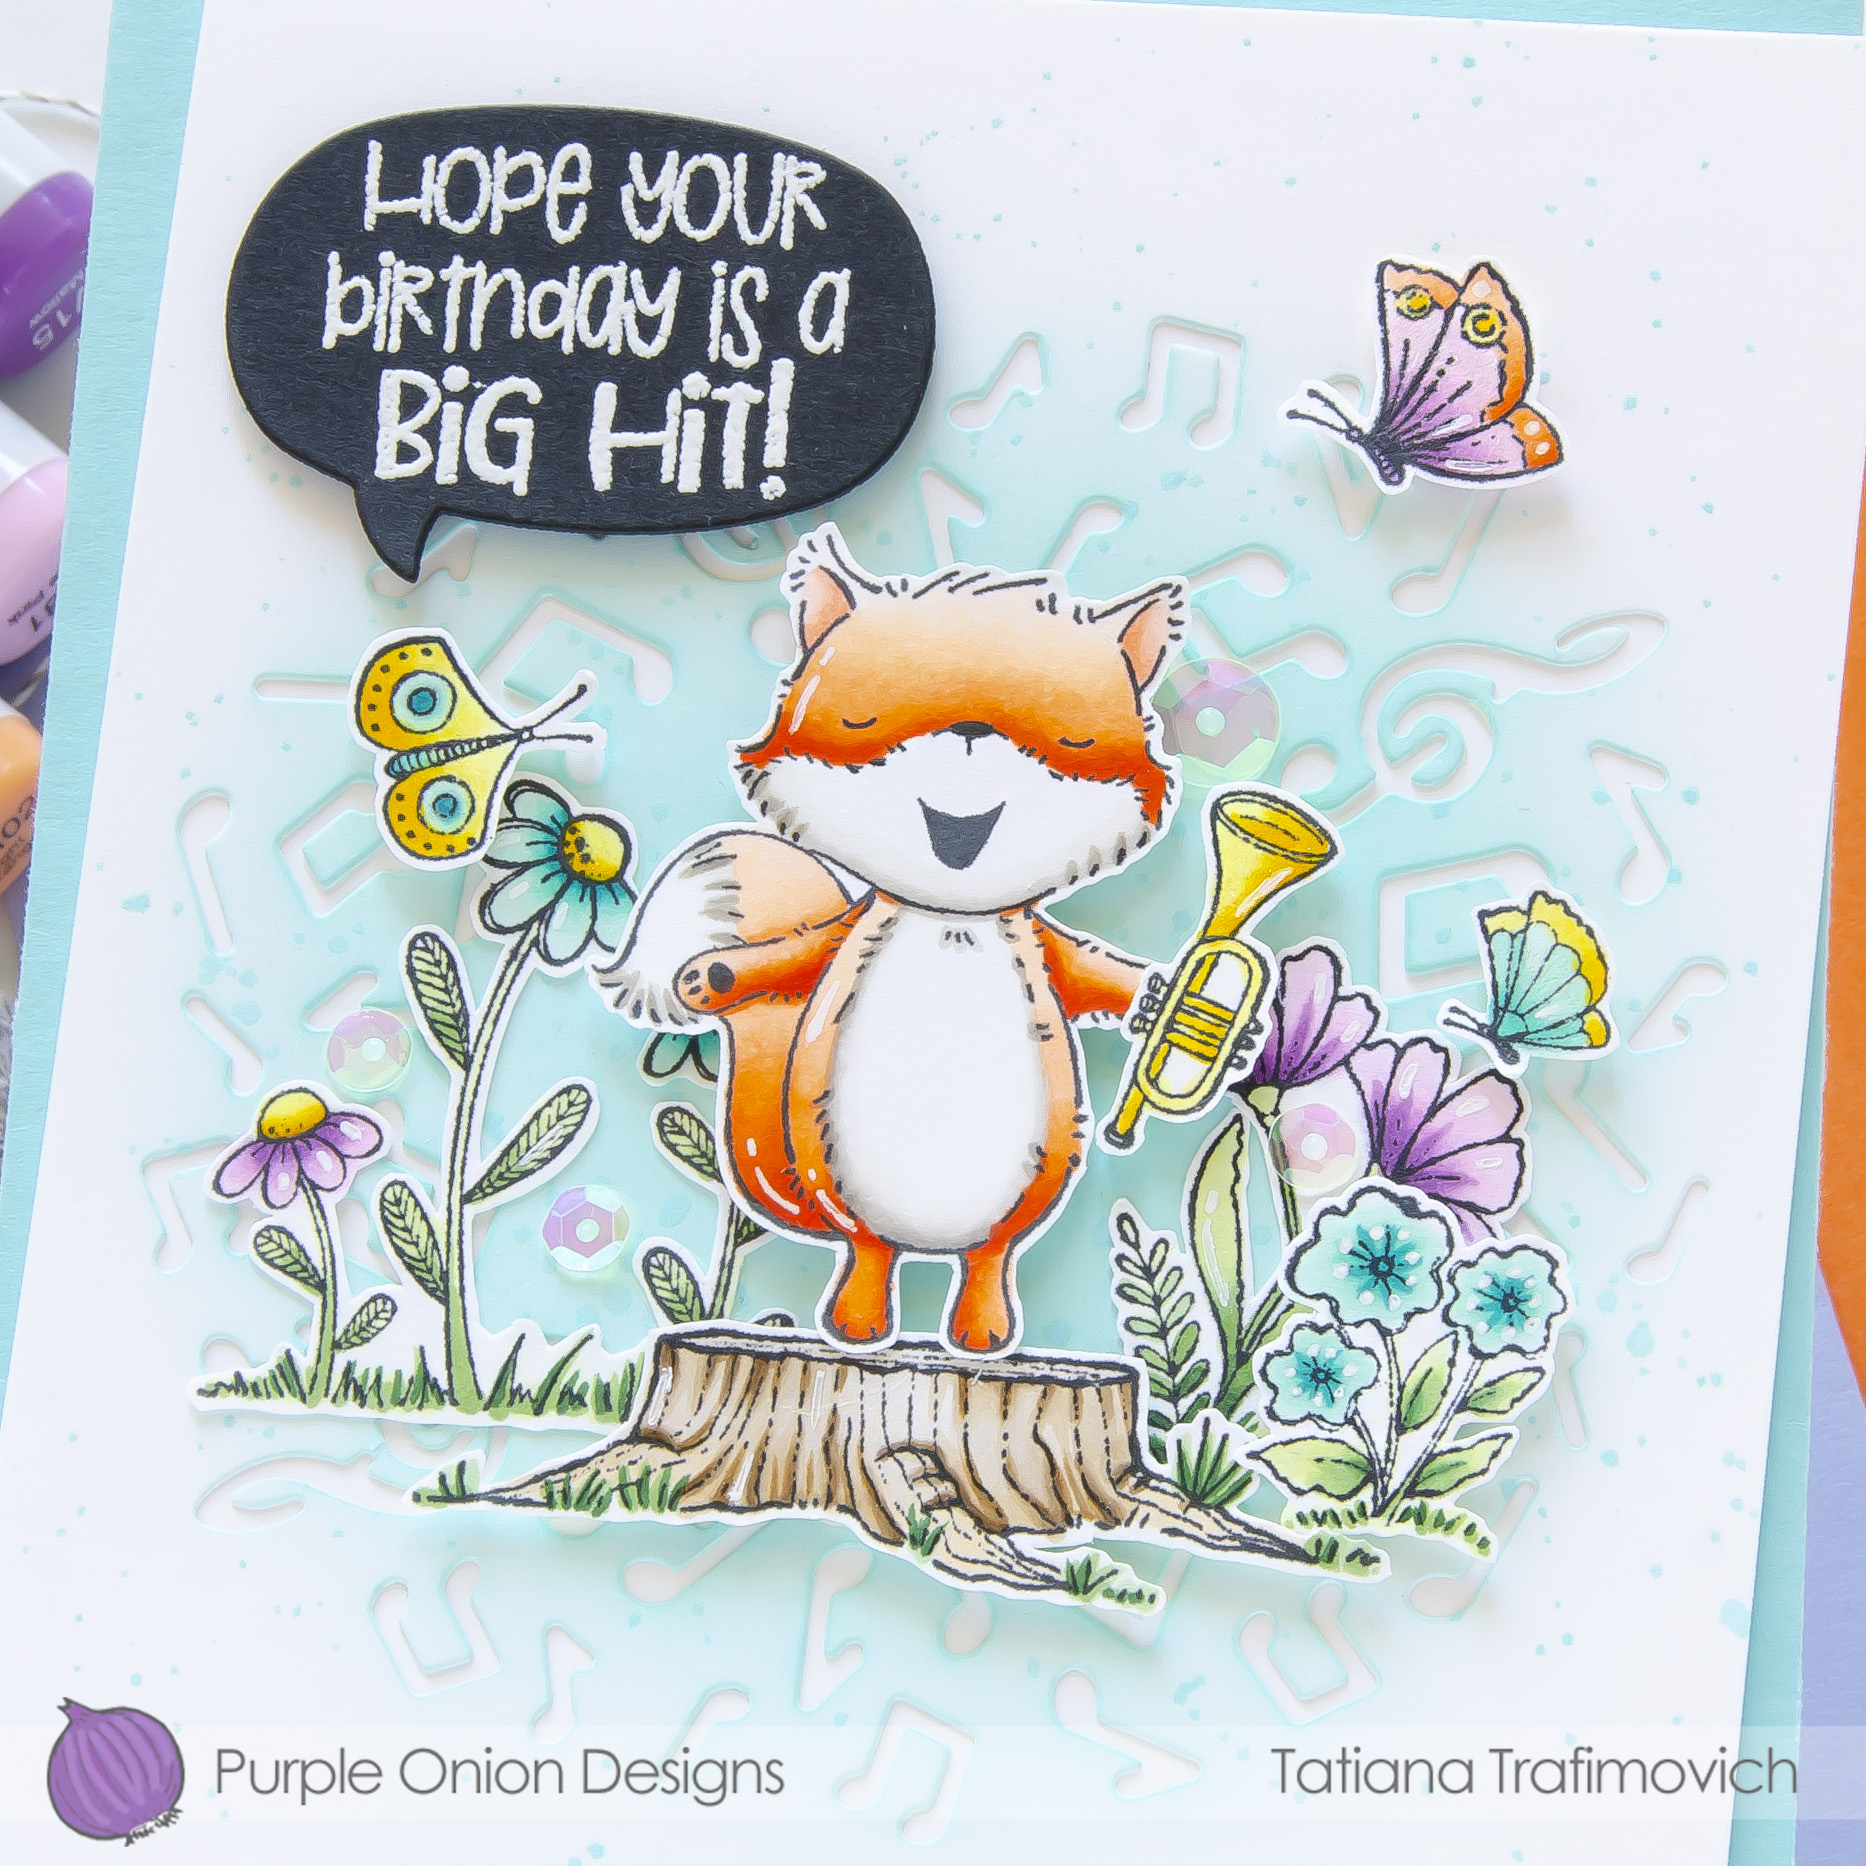 Hope Your Birthday Is A Big Hit! #handmade card by Tatiana Trafimovich #tatianacraftandart - stamps by Purple Onion Designs